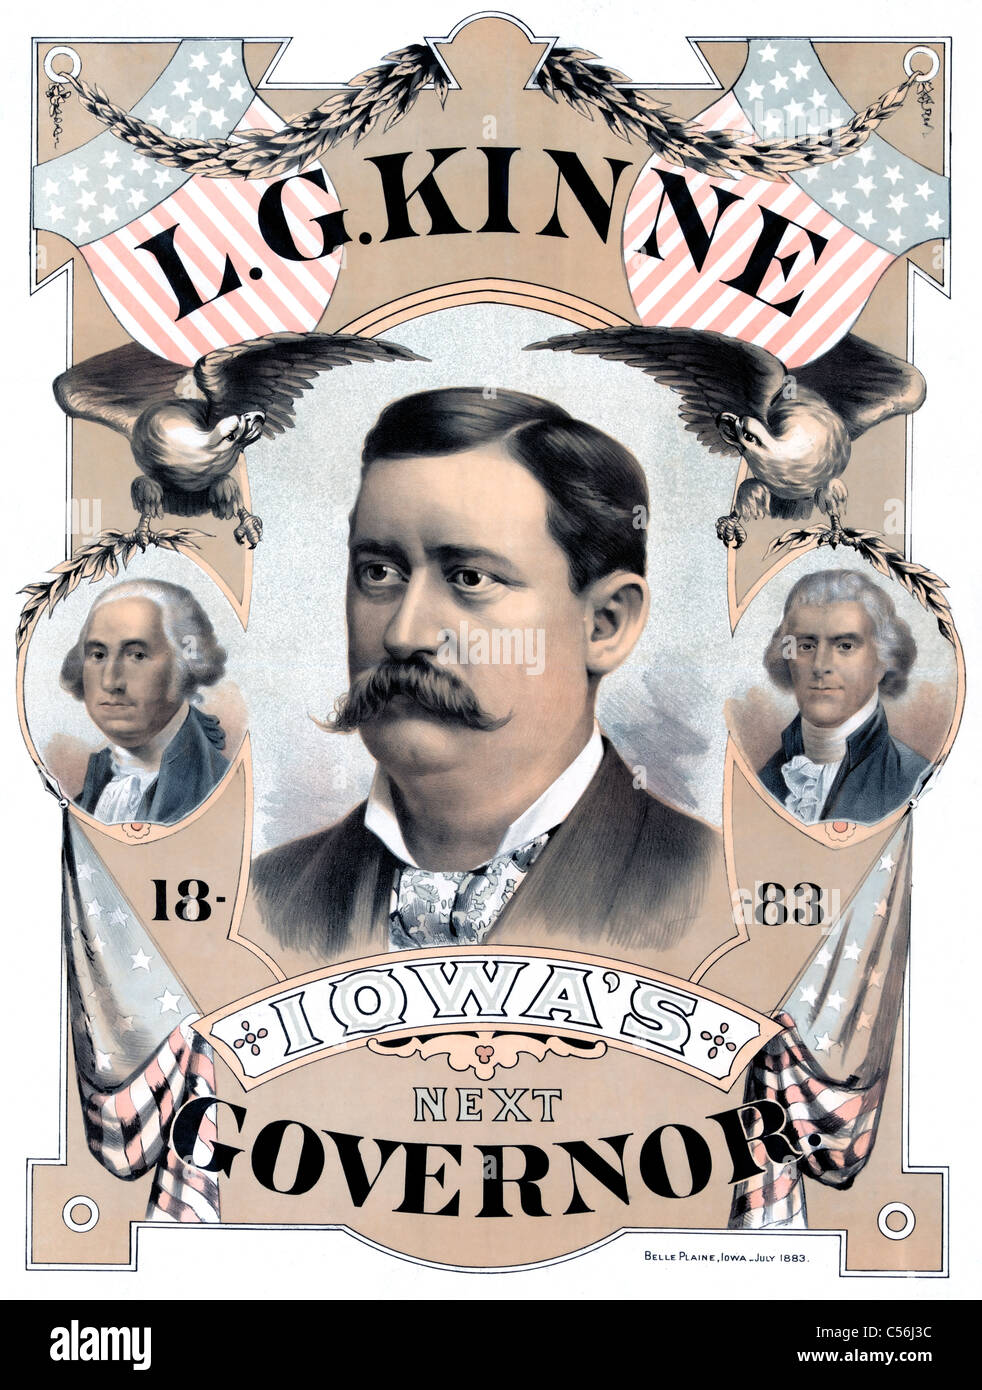 L.g. Kinne Iowa nächste Gouverneur, Wahlplakat 1883 Stockfoto